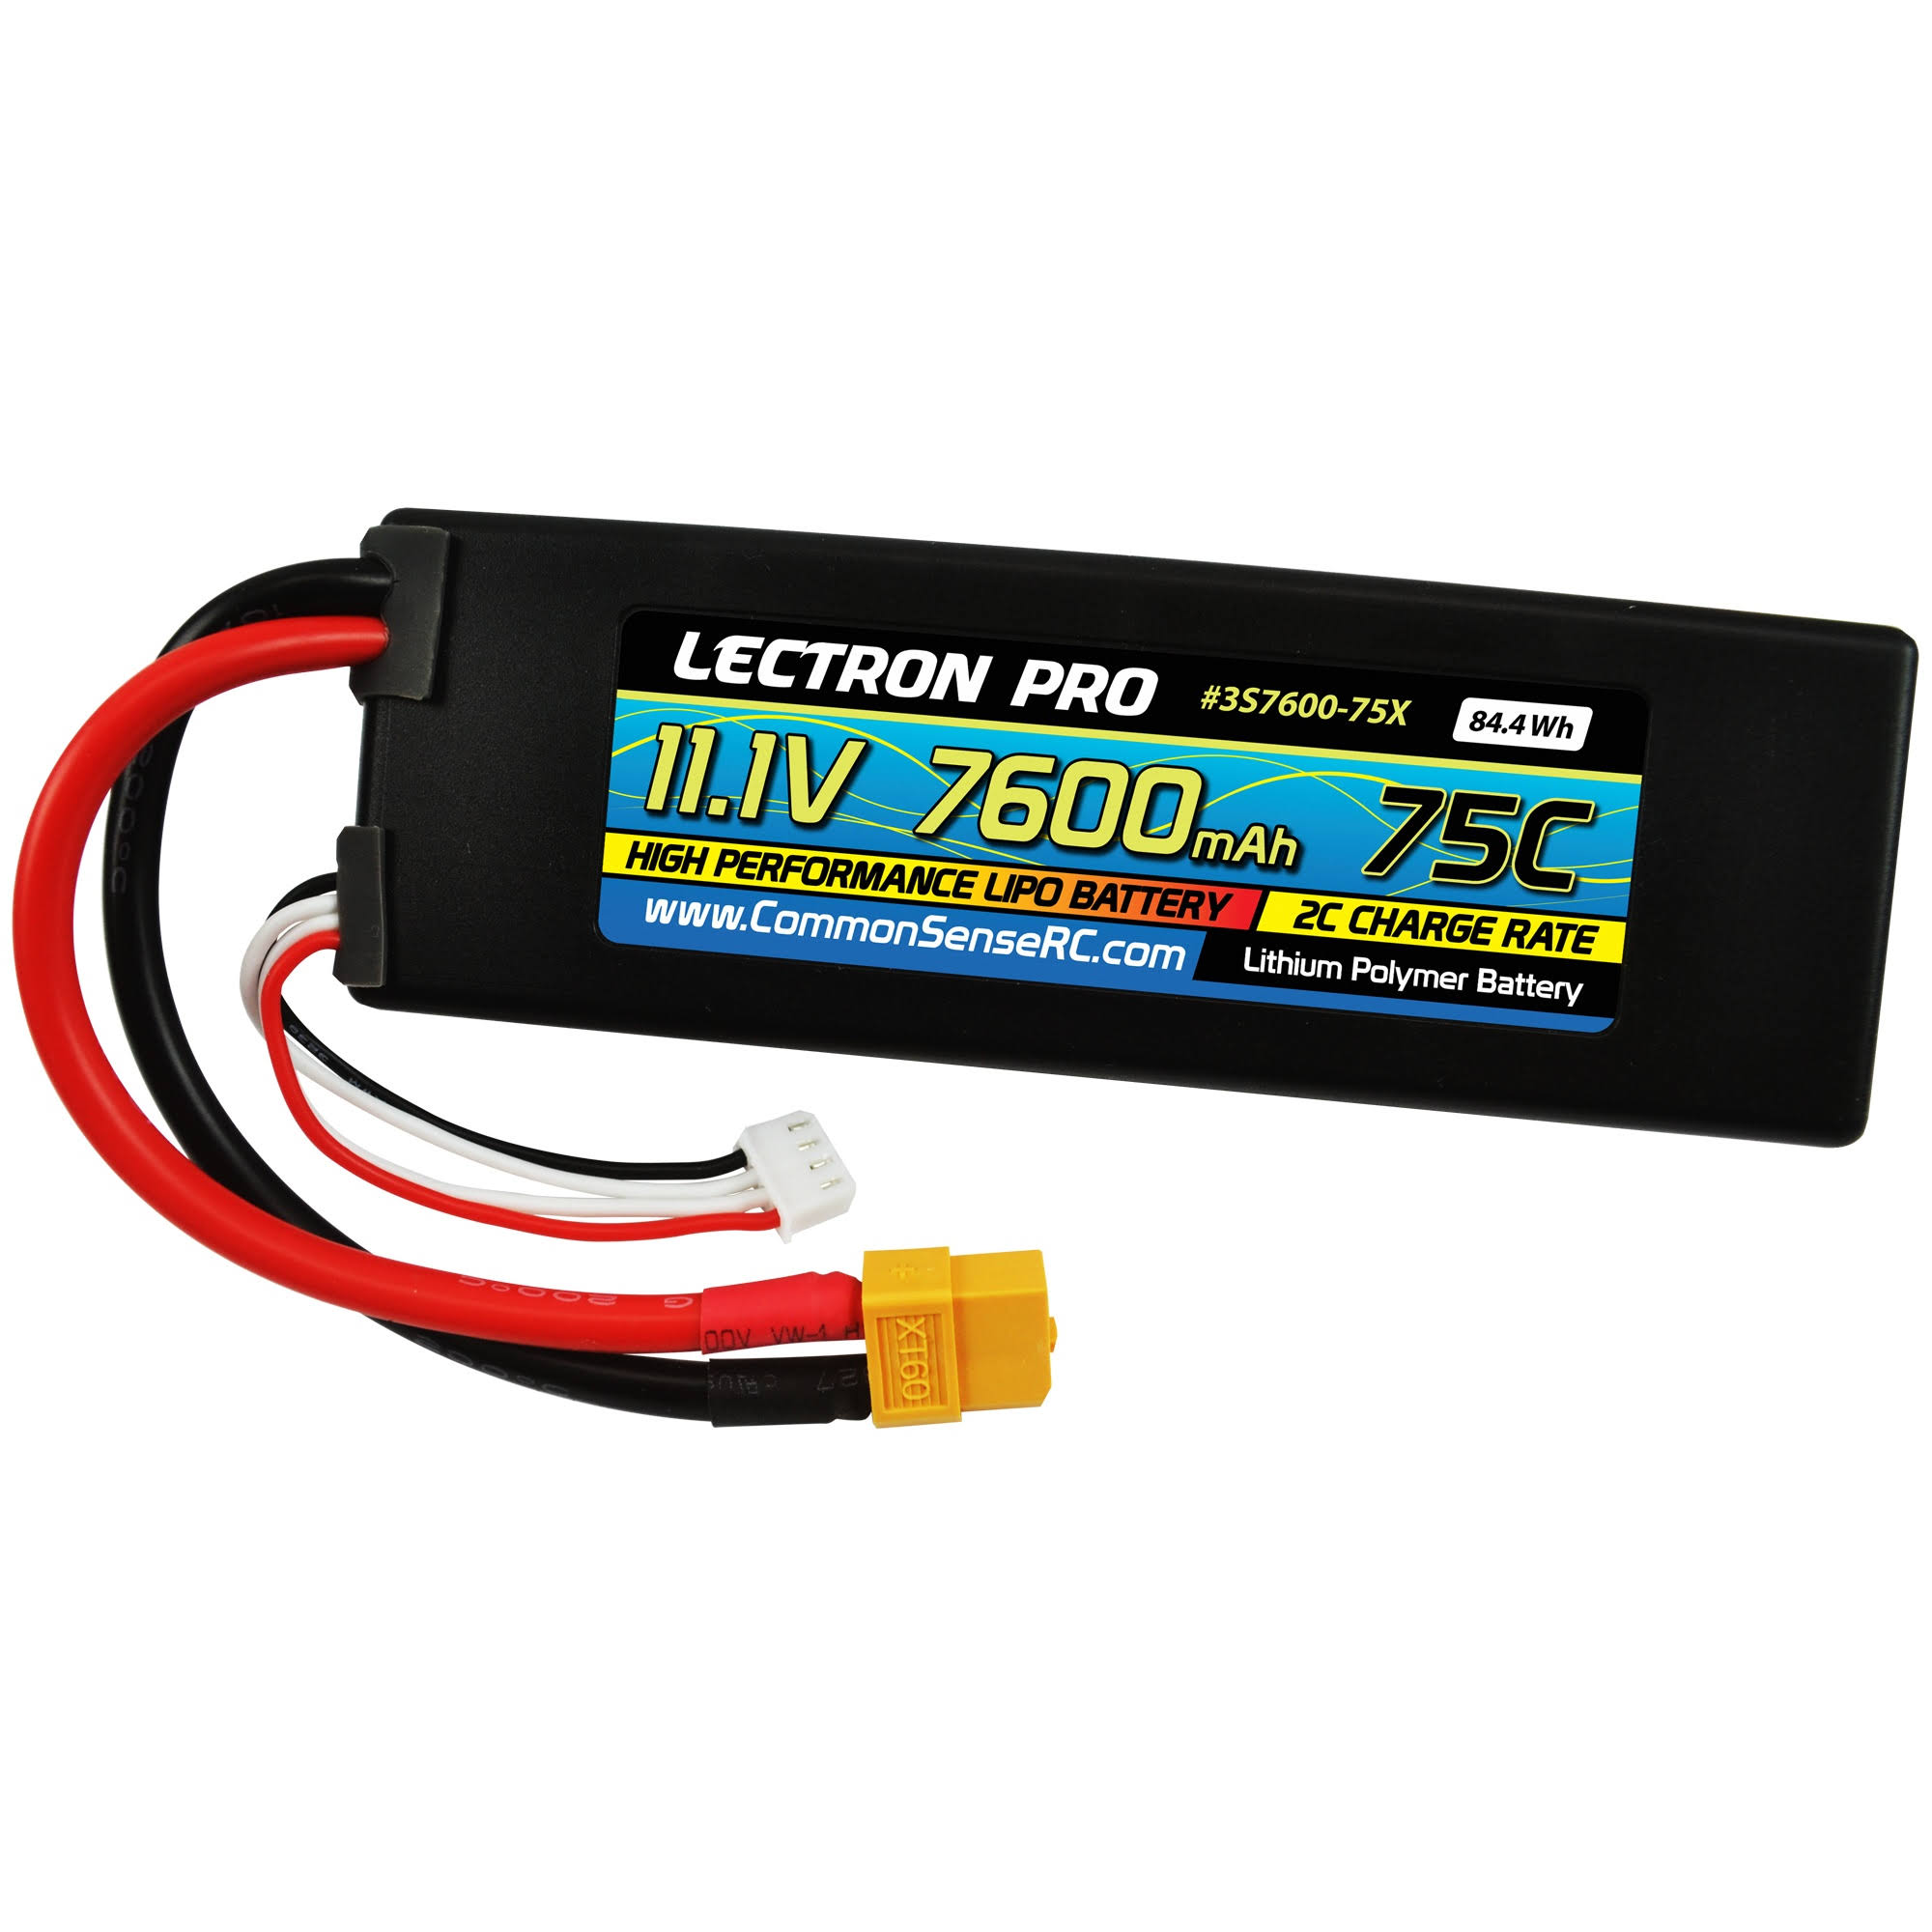 Common Sense RC Lectron Pro 7600mah 75c Lipo Battery - With Xt60 Connector, 11.1v